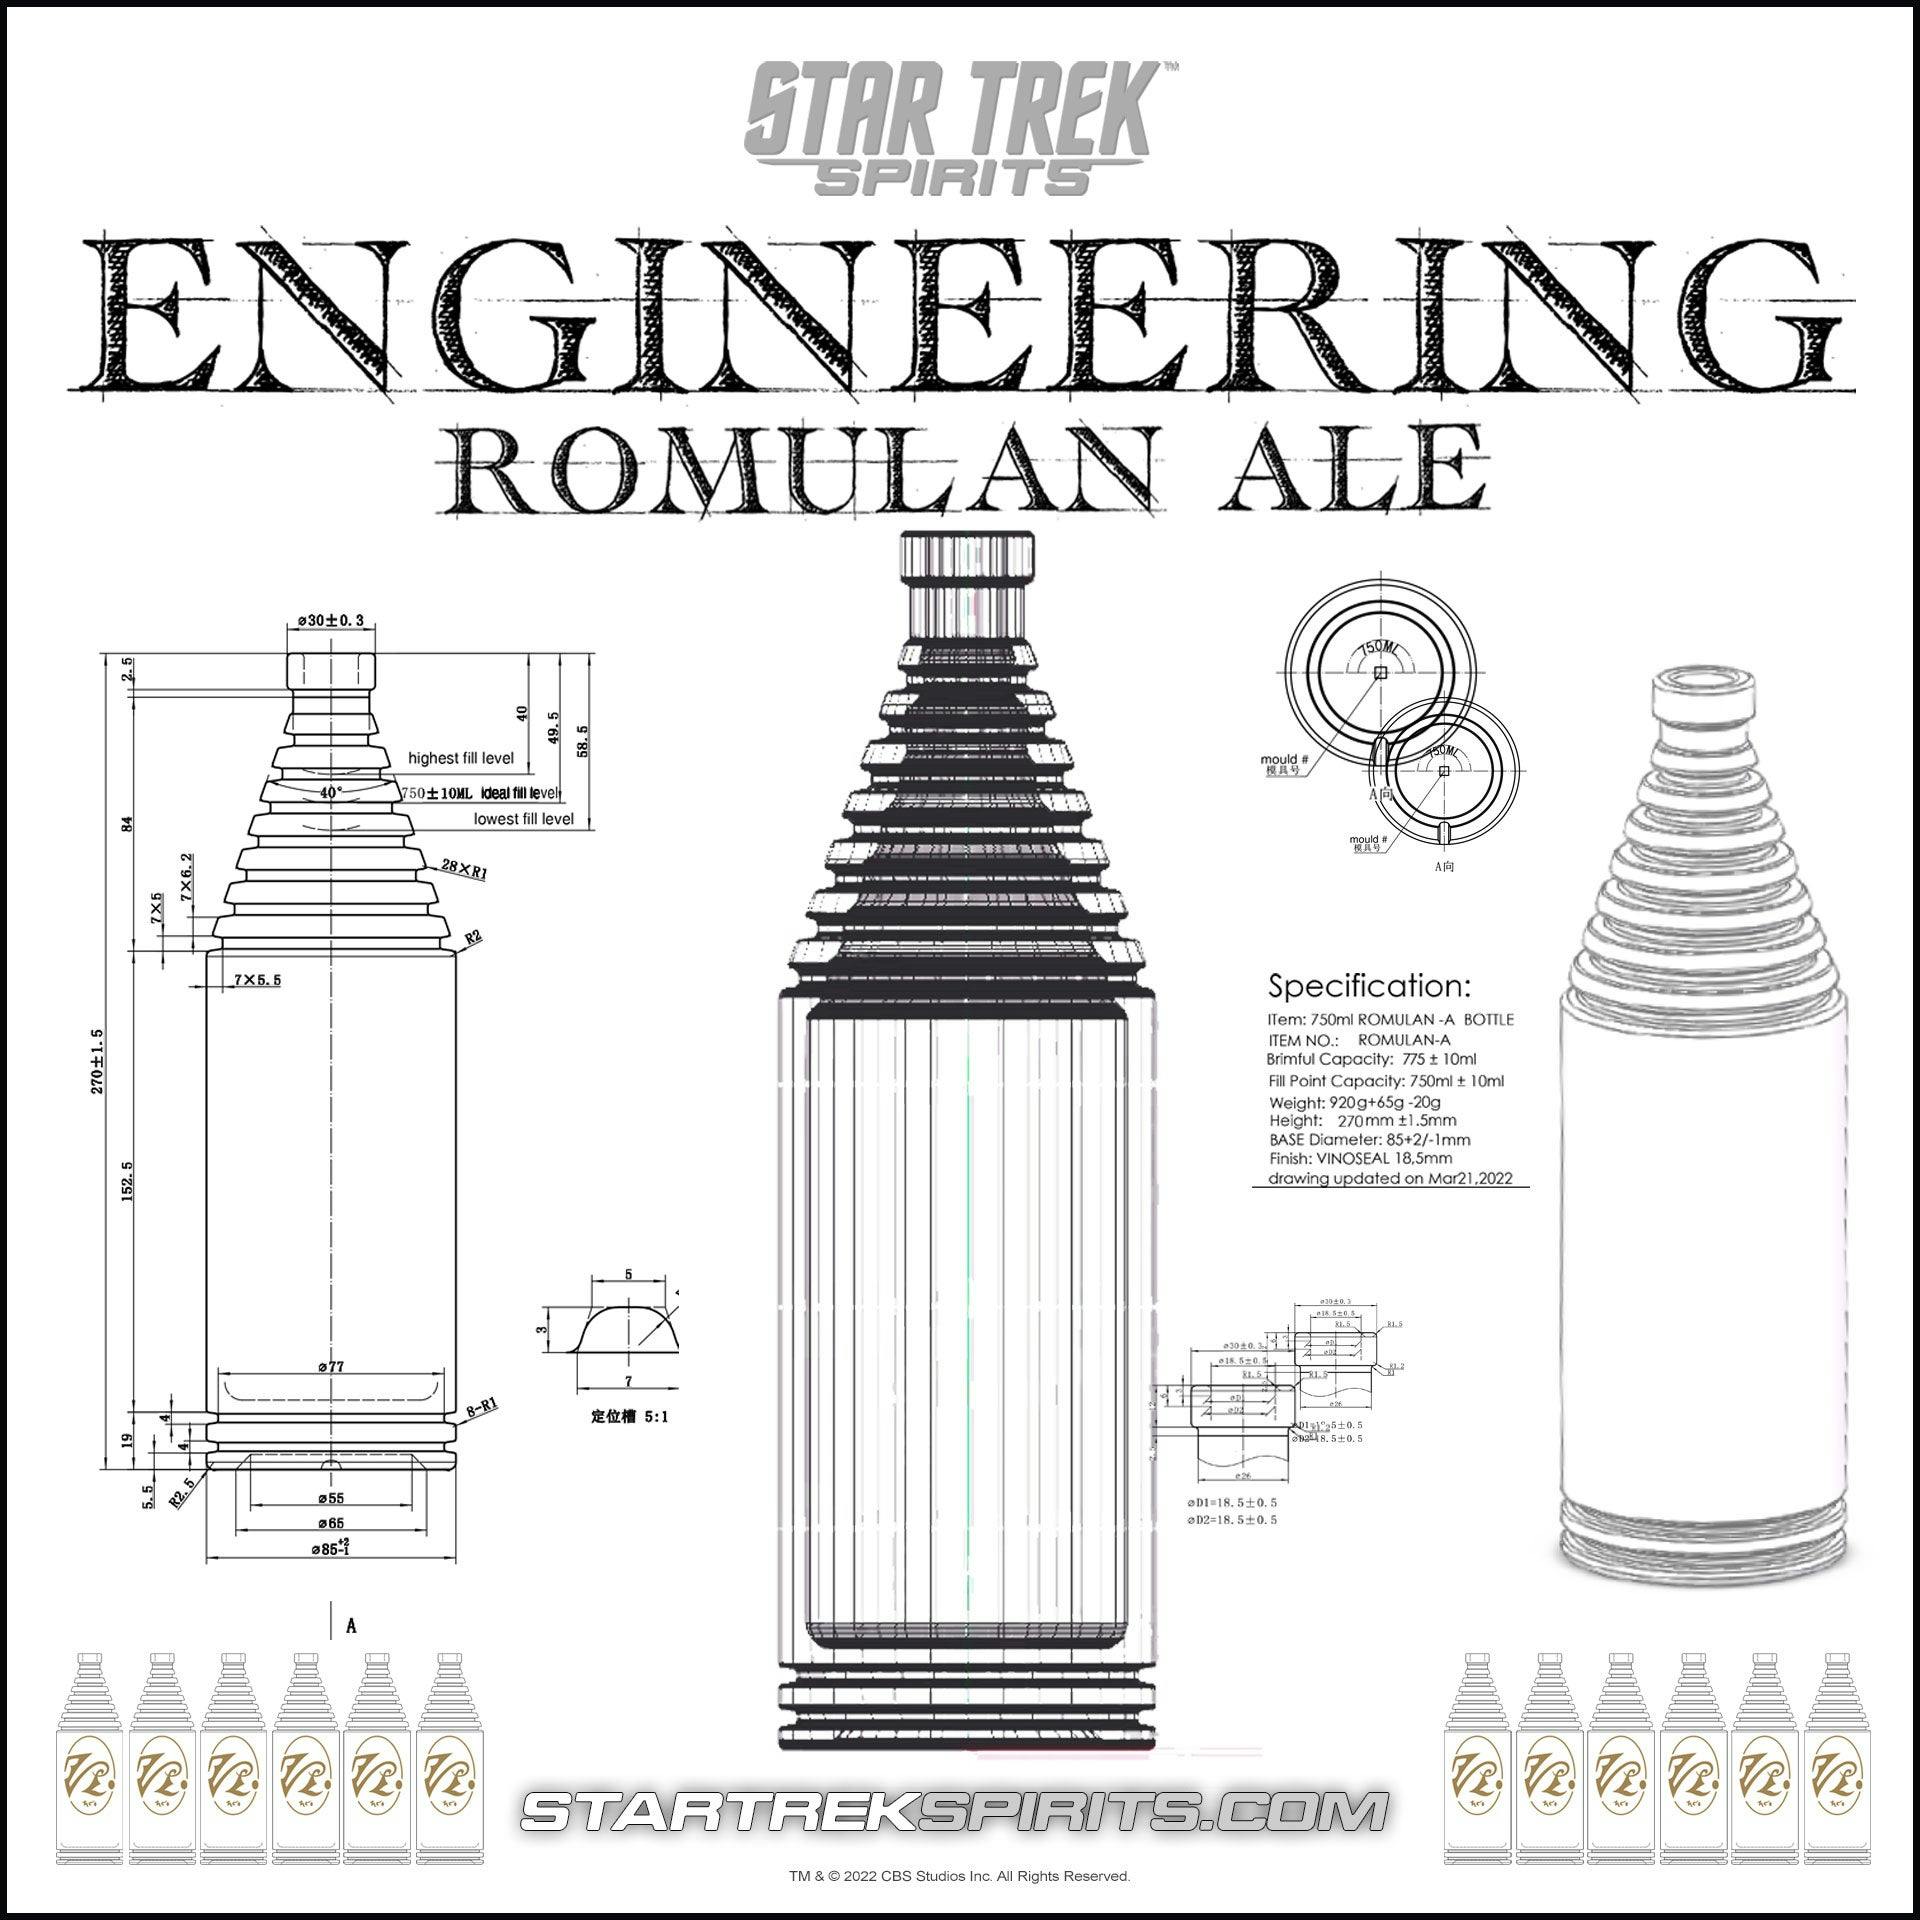 Schematics of engineering Wines That Rock's Romulan Ale bottles